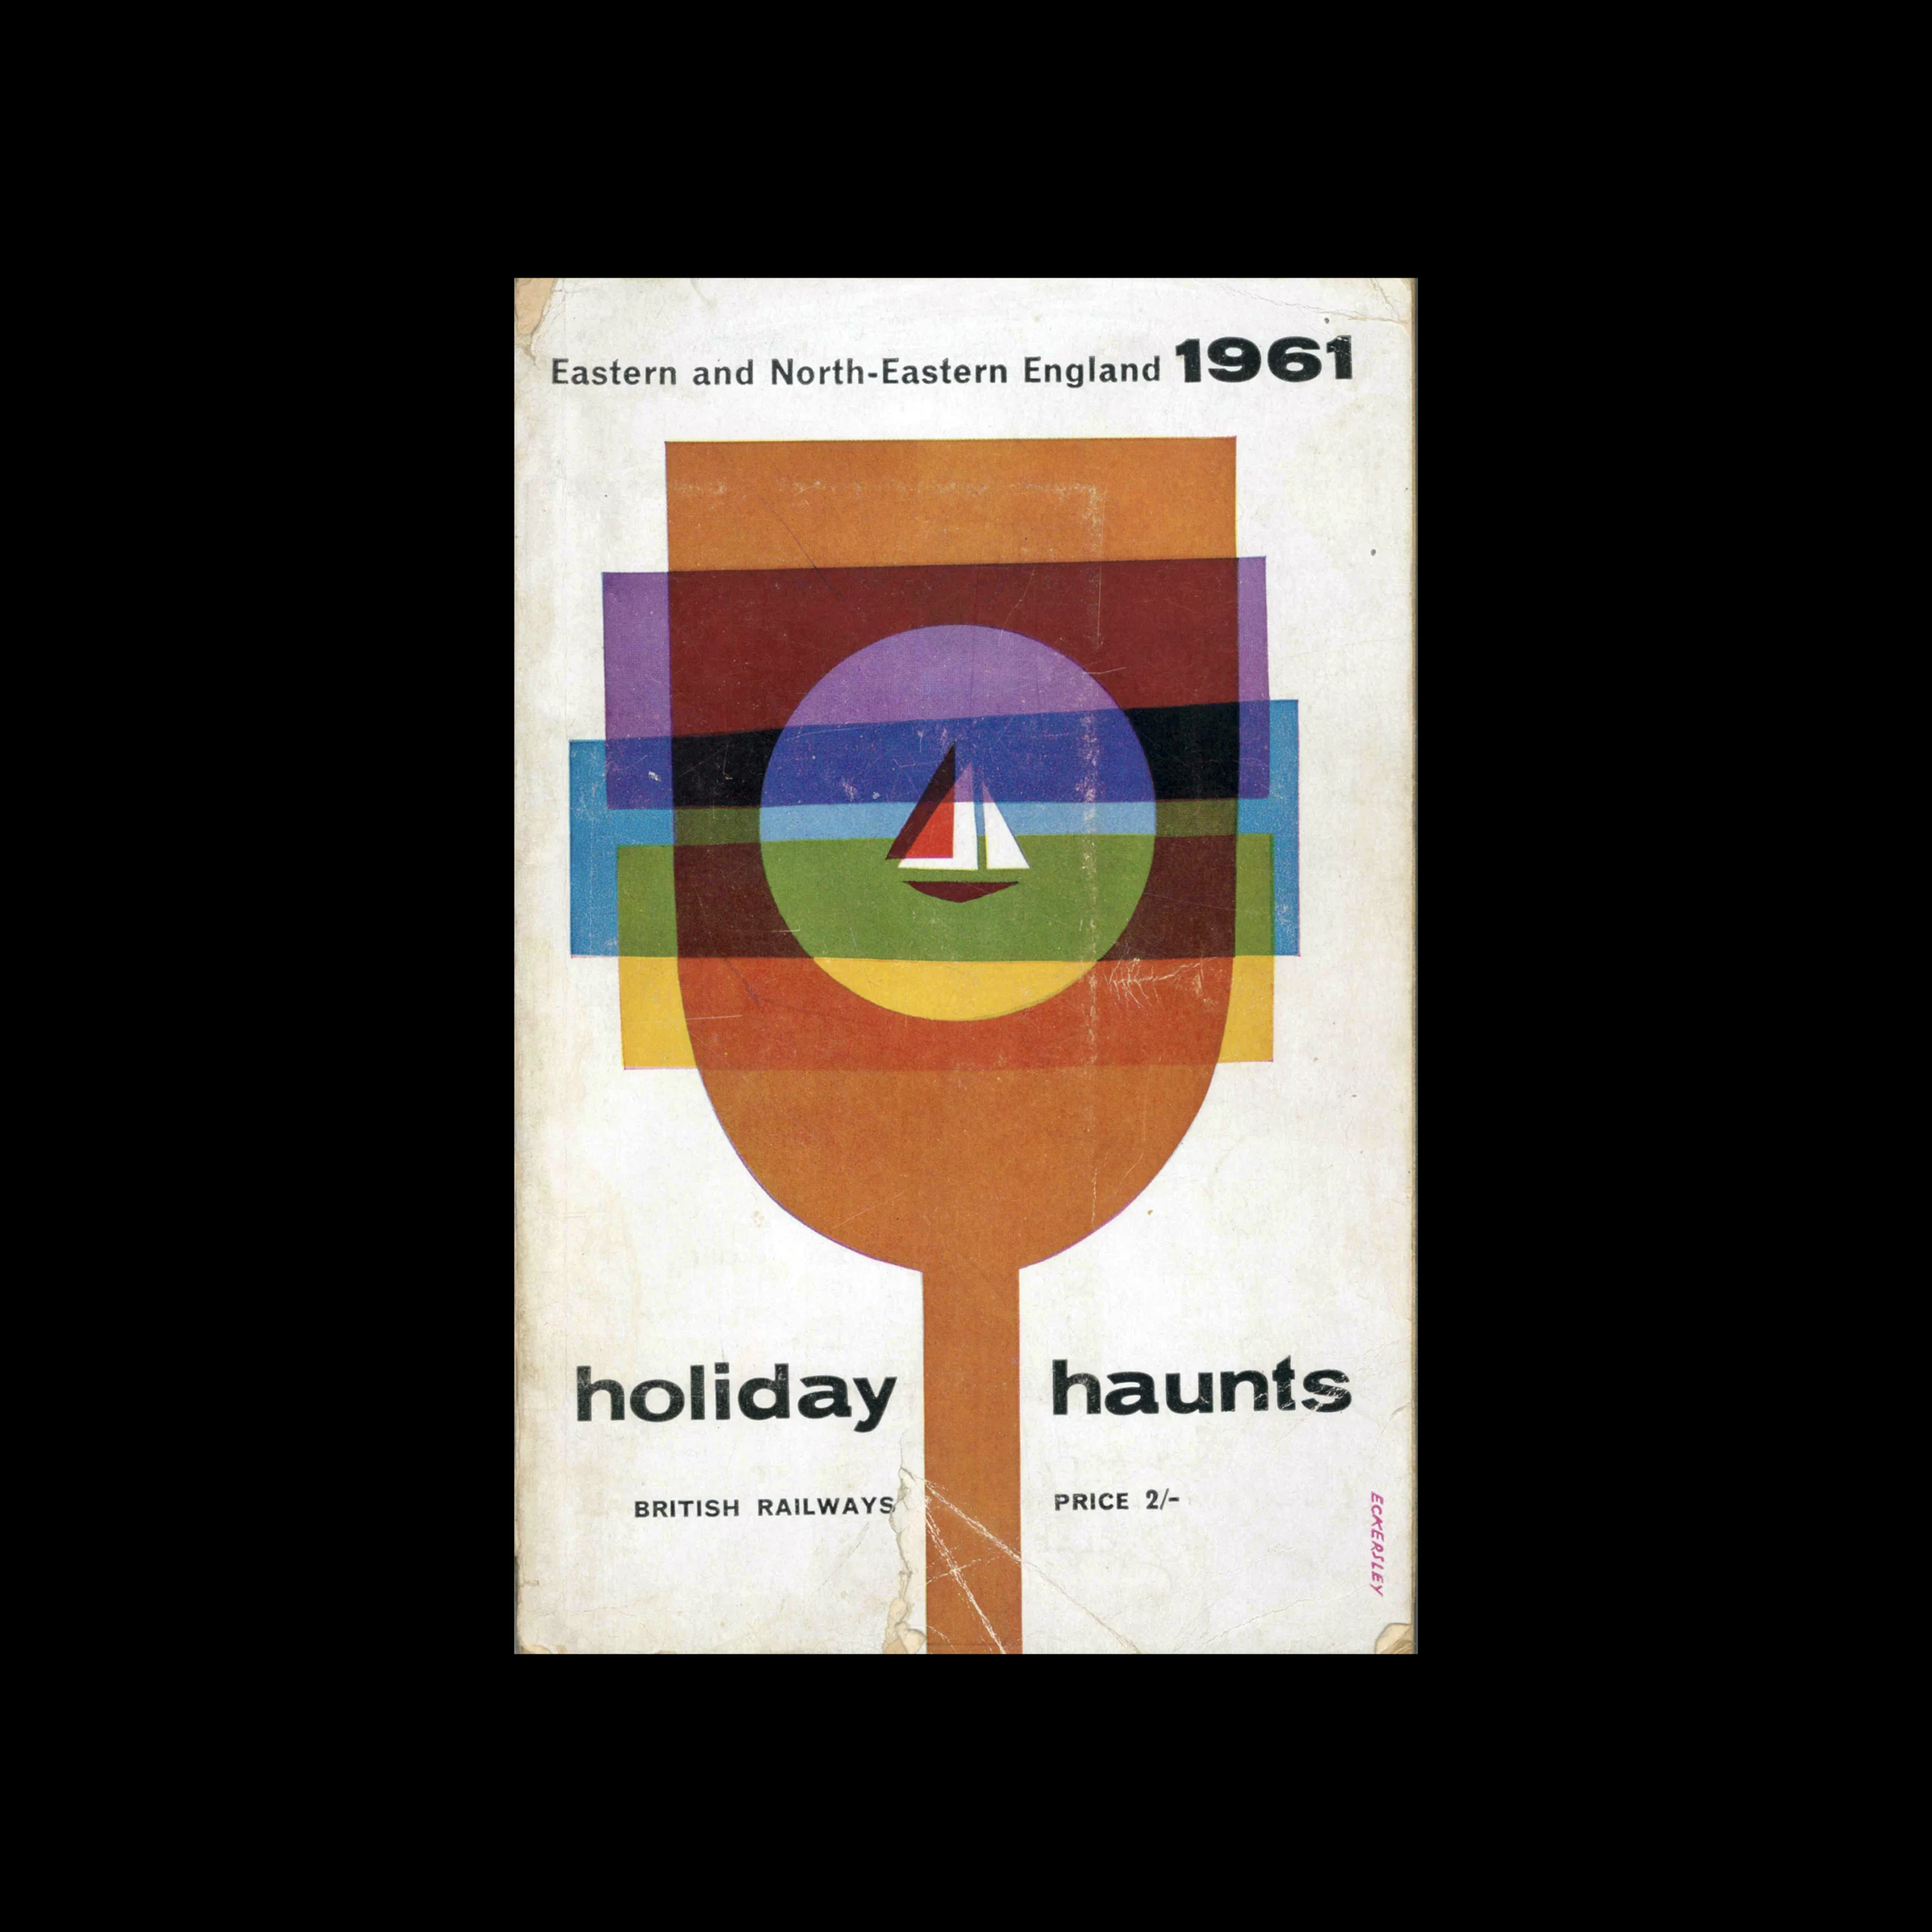 Holiday Haunts, Eastern & North Eastern England, British Railways, 1961. Cover design by Tom Eckersley